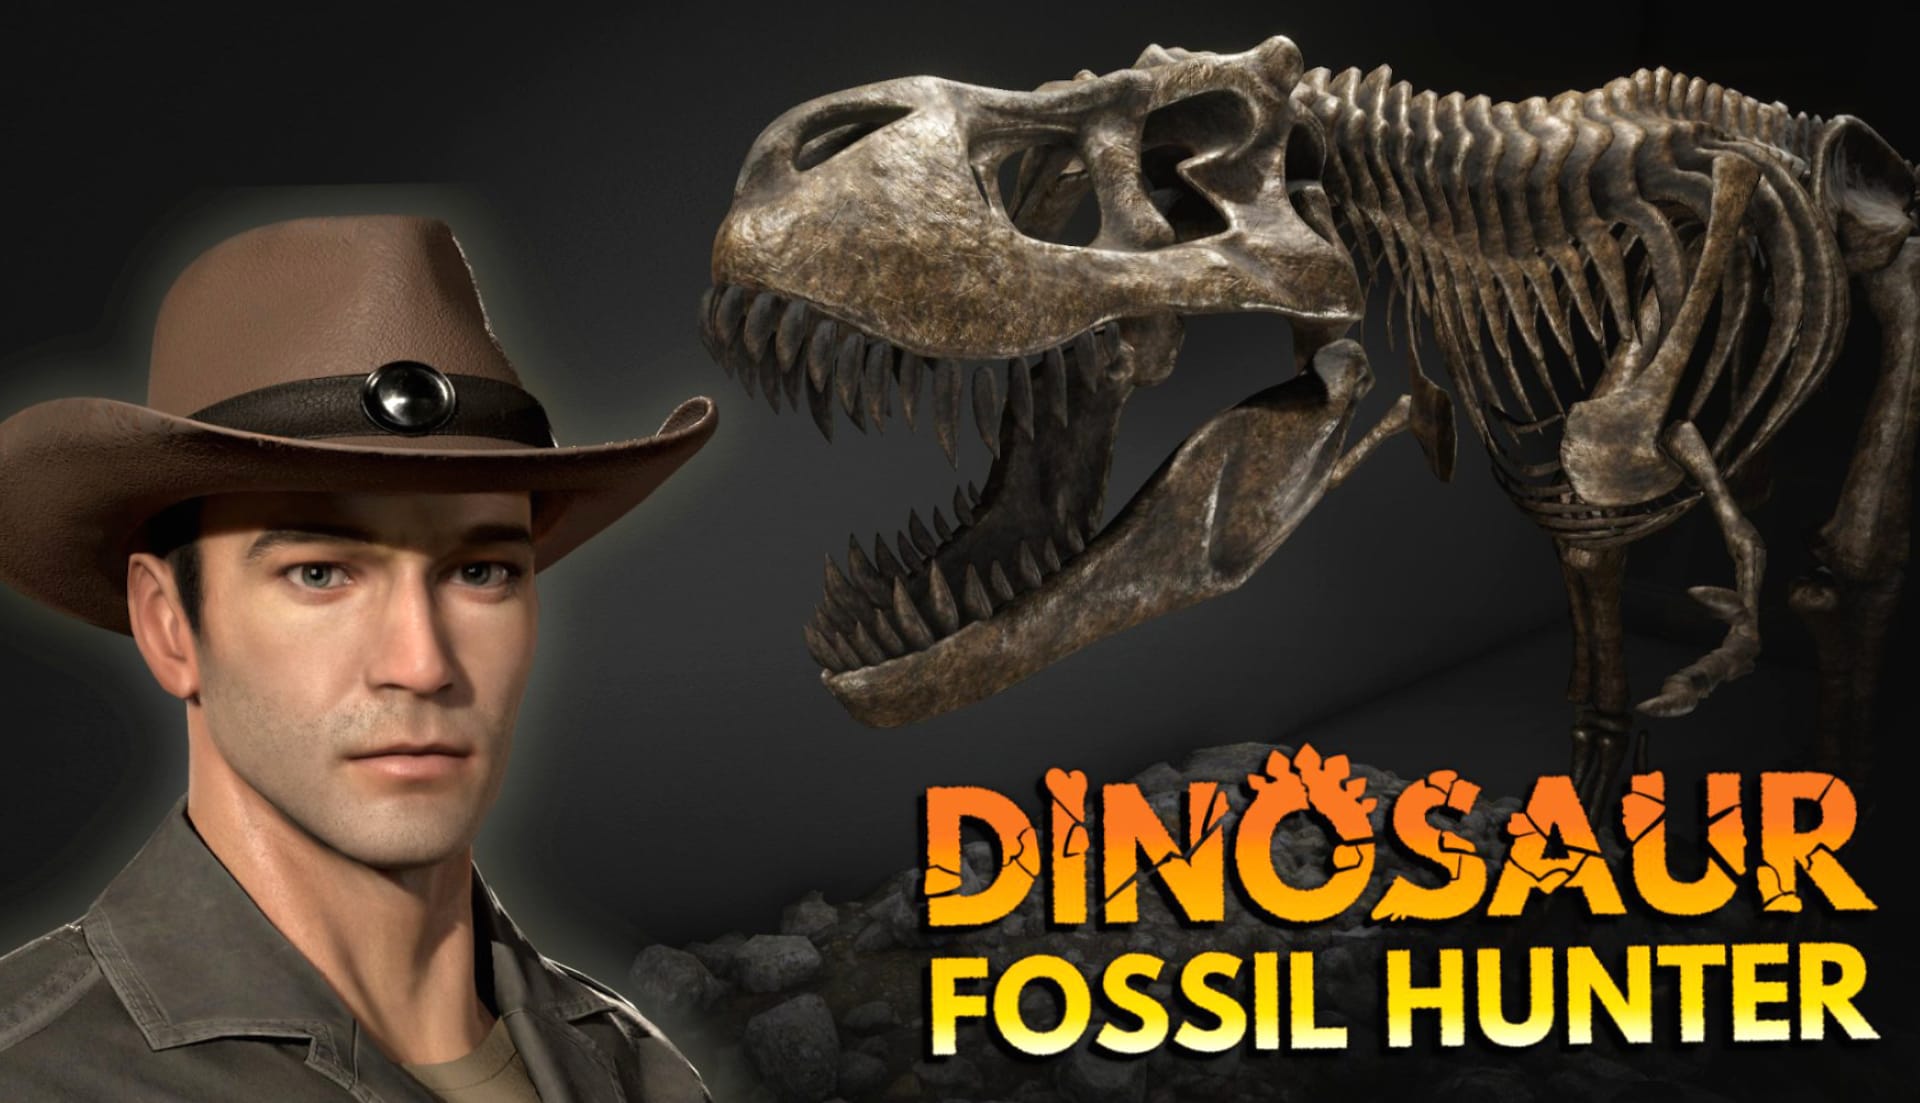 Dinosaur Fossil Hunter at 1024 x 1024 iPad size wallpapers HD quality